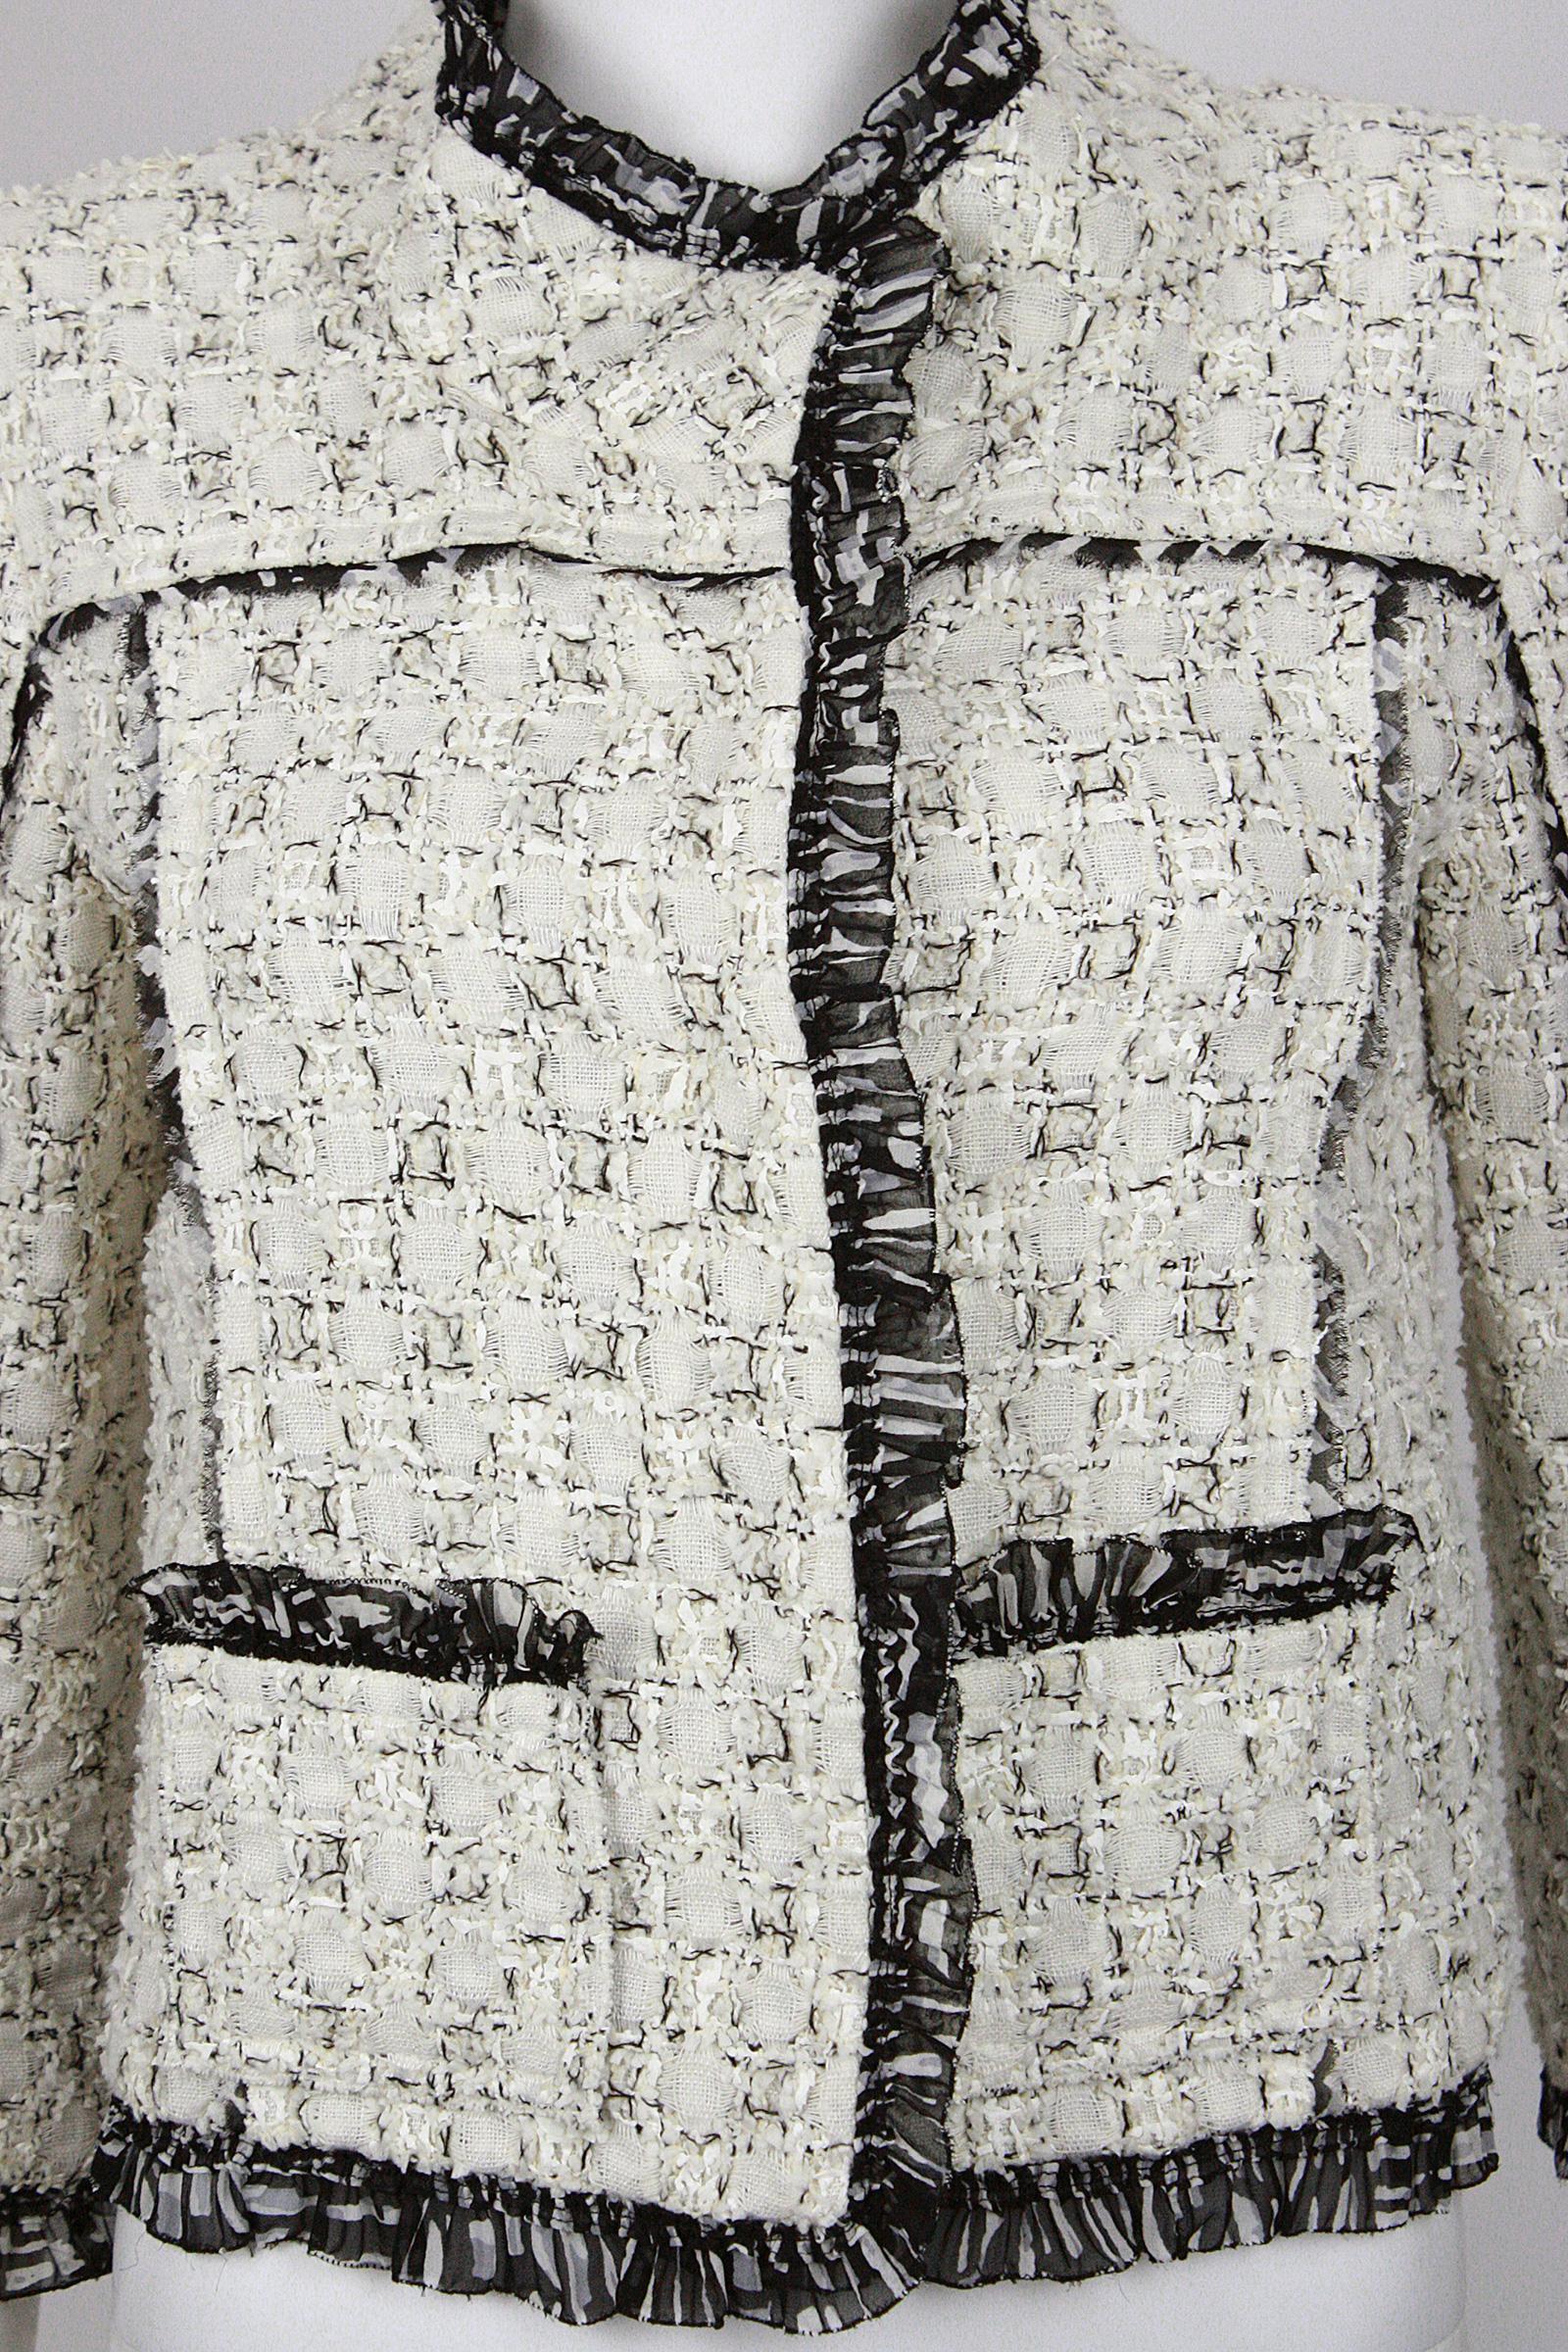 Oscar de la Renta 
Crop jacket
Black & white
Unique cotton blend textile
Ruffled chiffon detailing
Bracelet length sleeves
Two front pockets
Snap closures
Silk lining